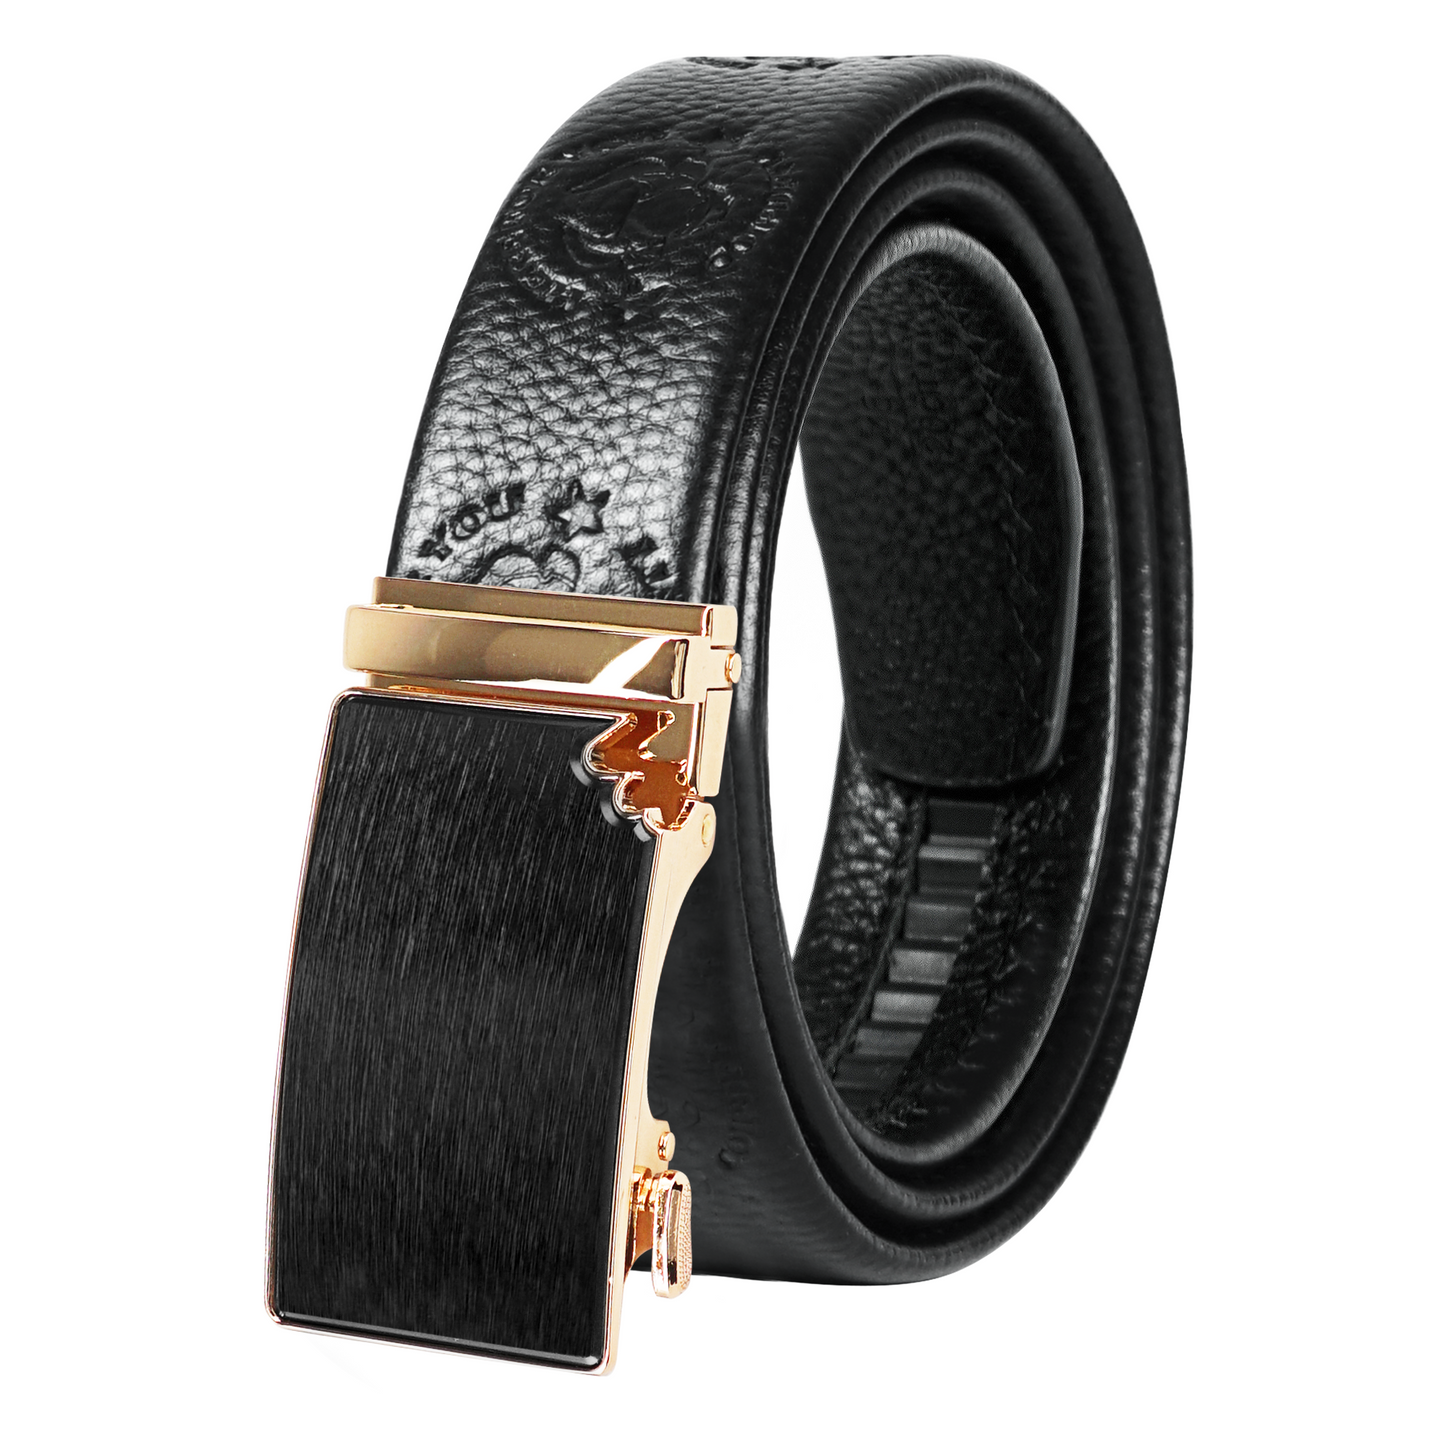 Inclusive series Ratchet Belt for Men - Mens Belt Leather 1 3/8" for Casual Jeans